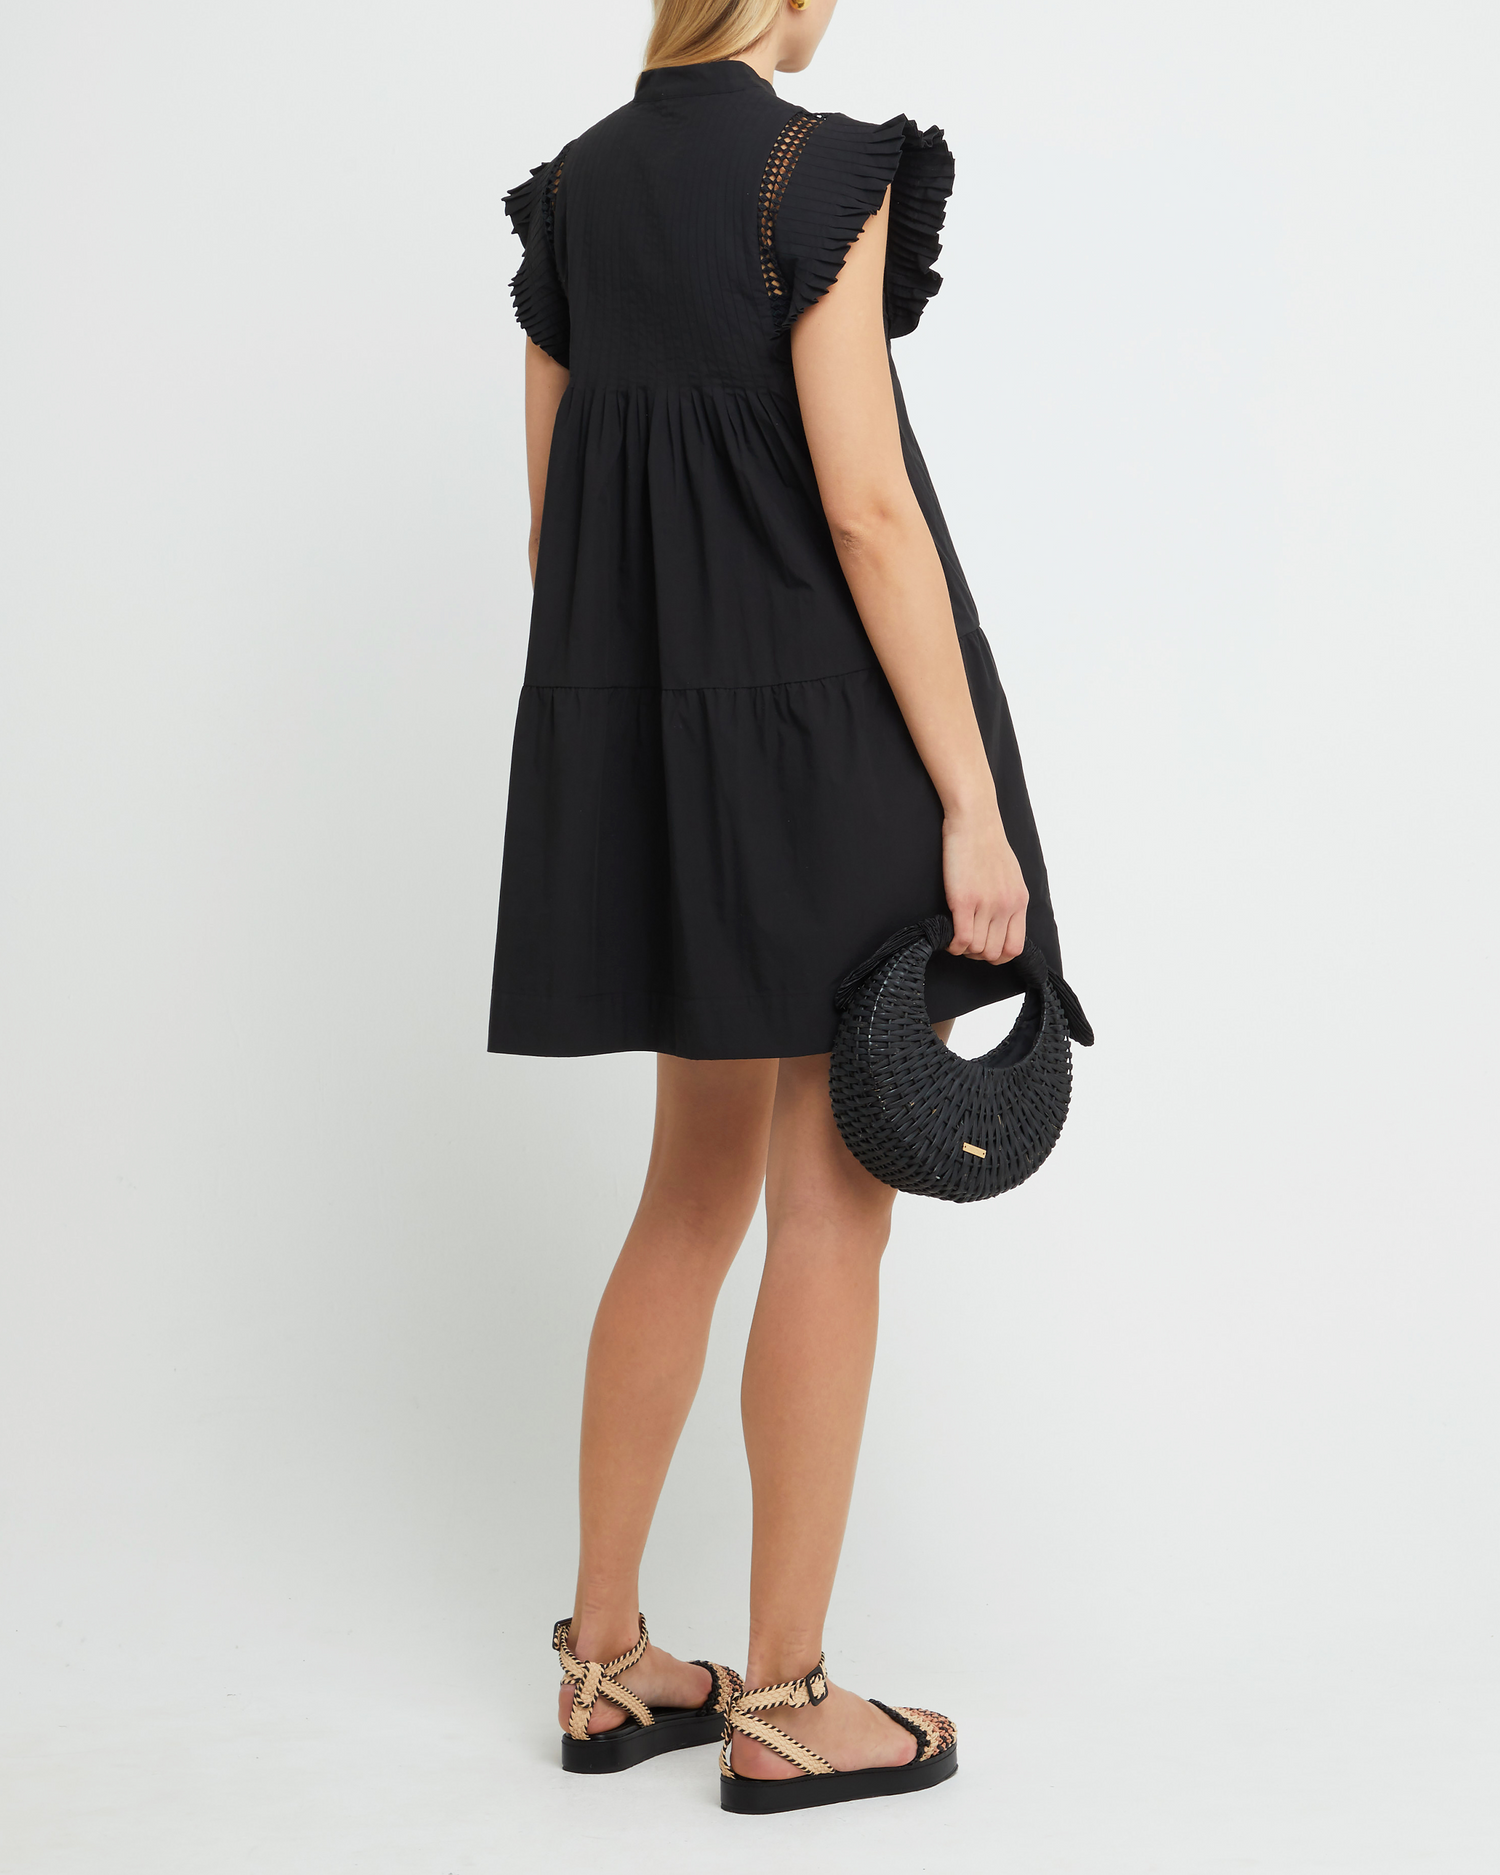 Fifth image of Callan Dress, a black mini dress, paneled, lace, ruffle sleeve, high neckline